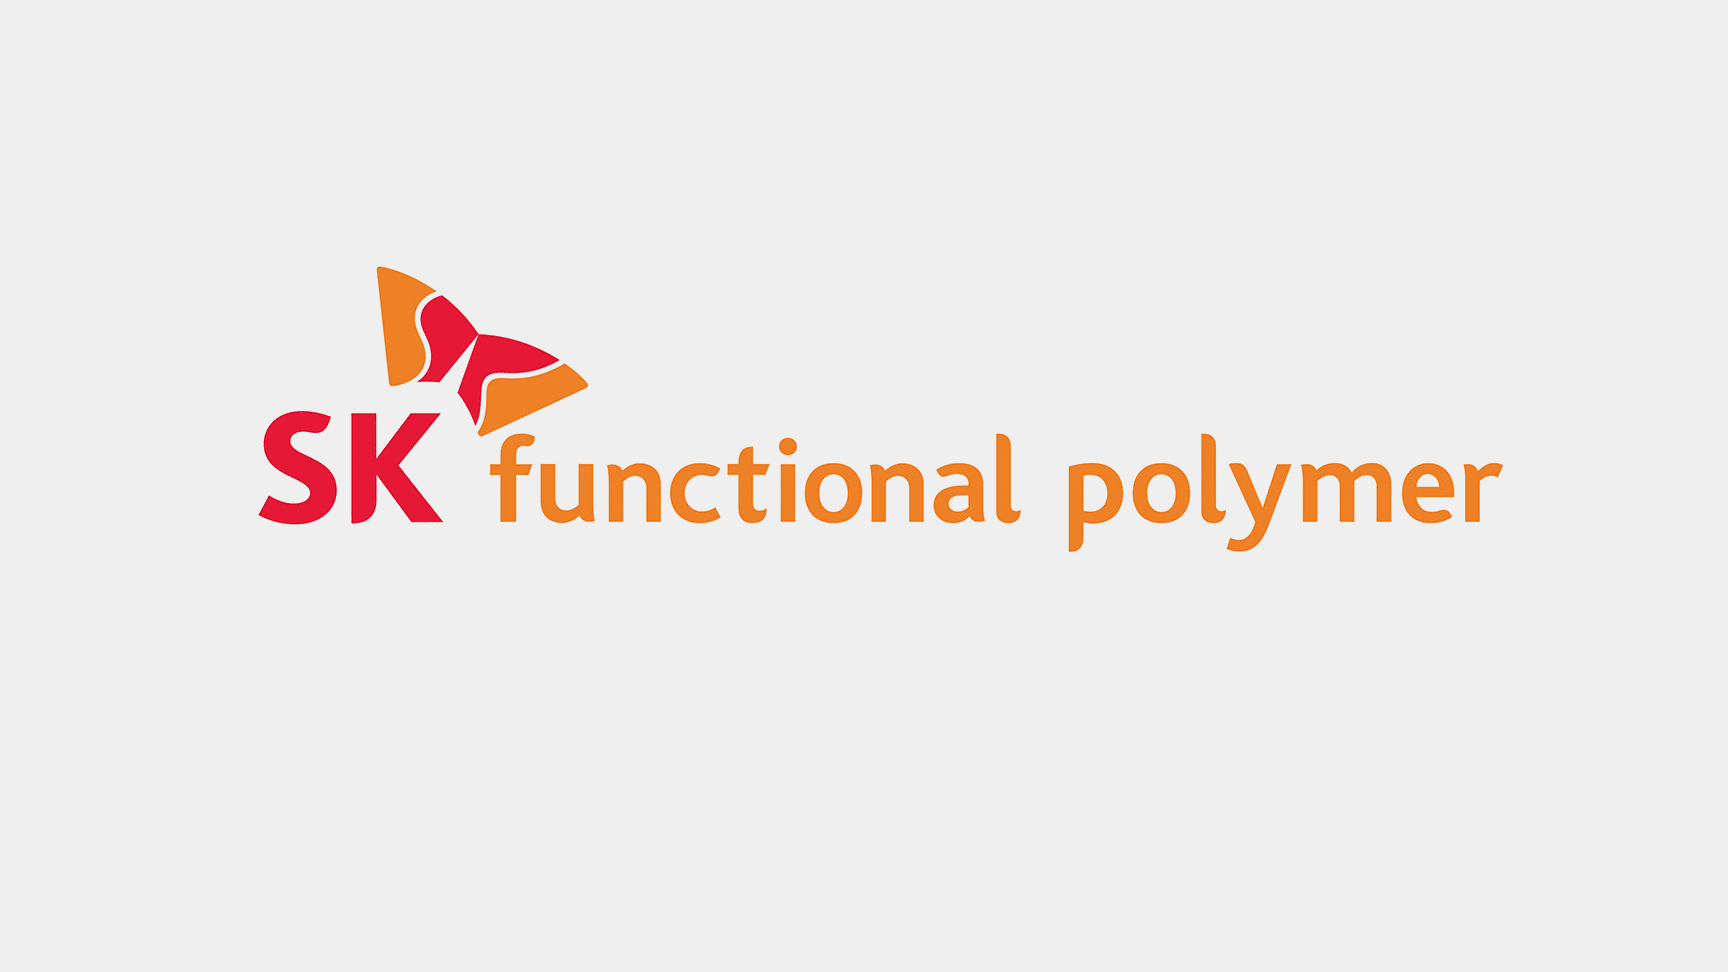 envoyer cv sk functional polymer